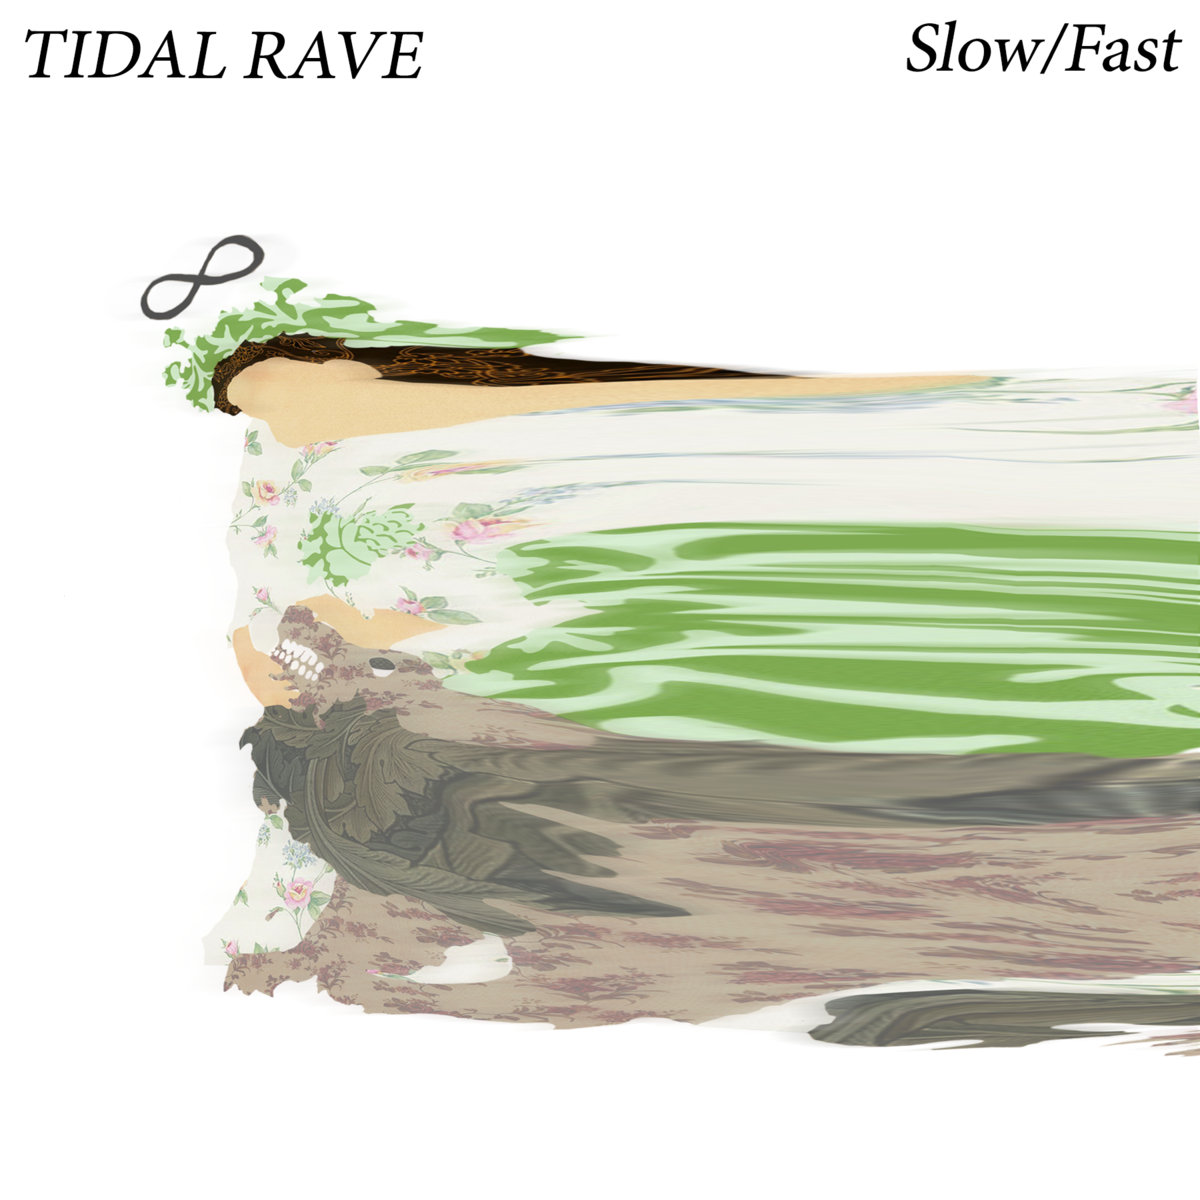 Slow/ Fast